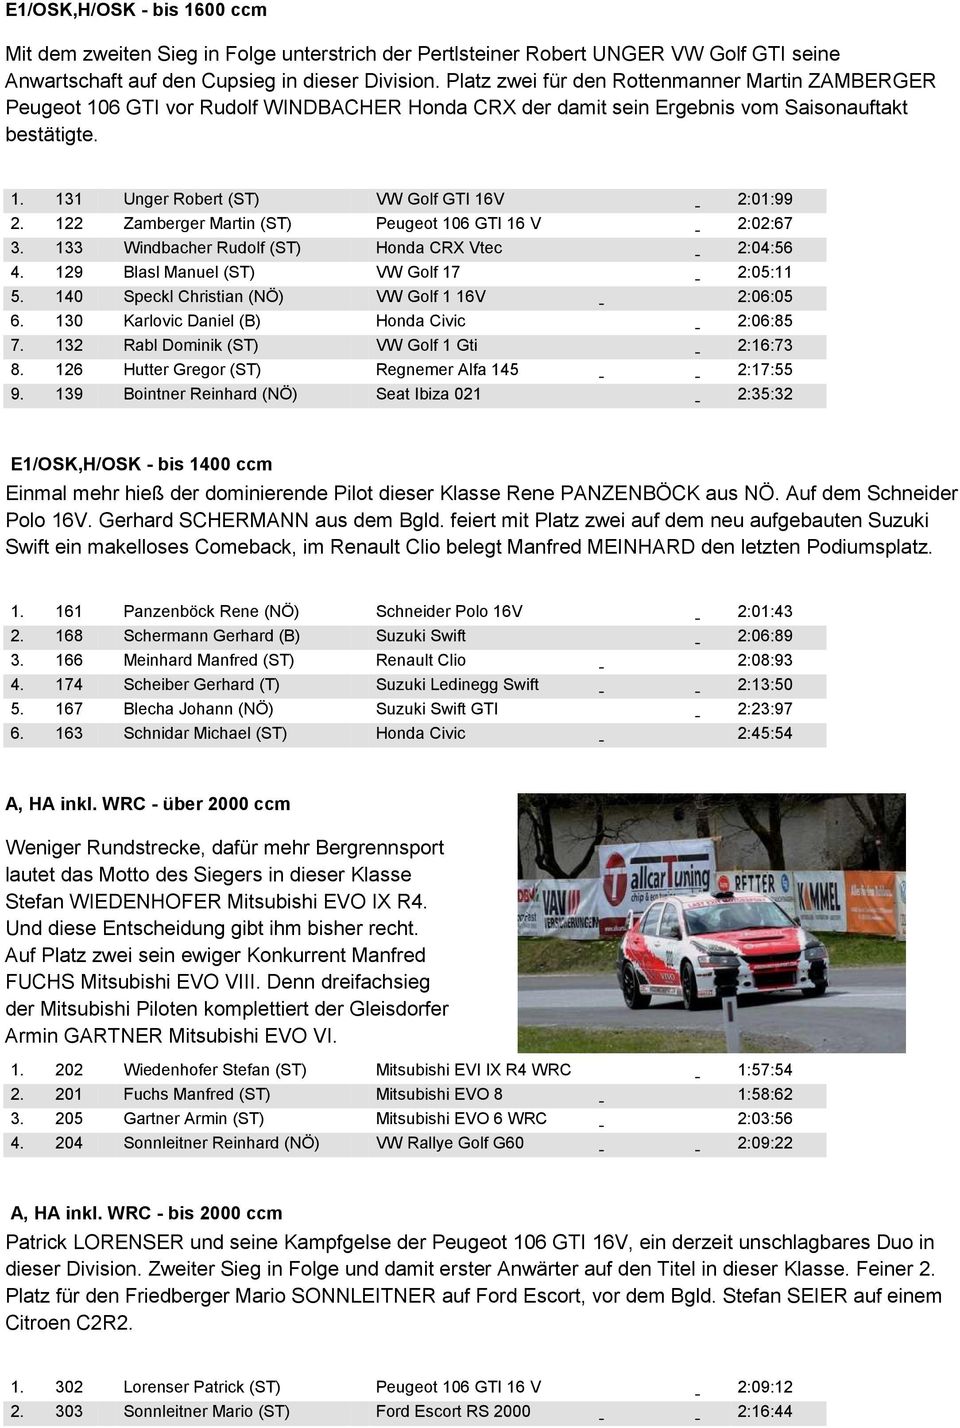 122 Zamberger Martin (ST) Peugeot 106 GTI 16 V 2:02:67 3. 133 Windbacher Rudolf (ST) Honda CRX Vtec 2:04:56 4. 129 Blasl Manuel (ST) VW Golf 17 2:05:11 5.